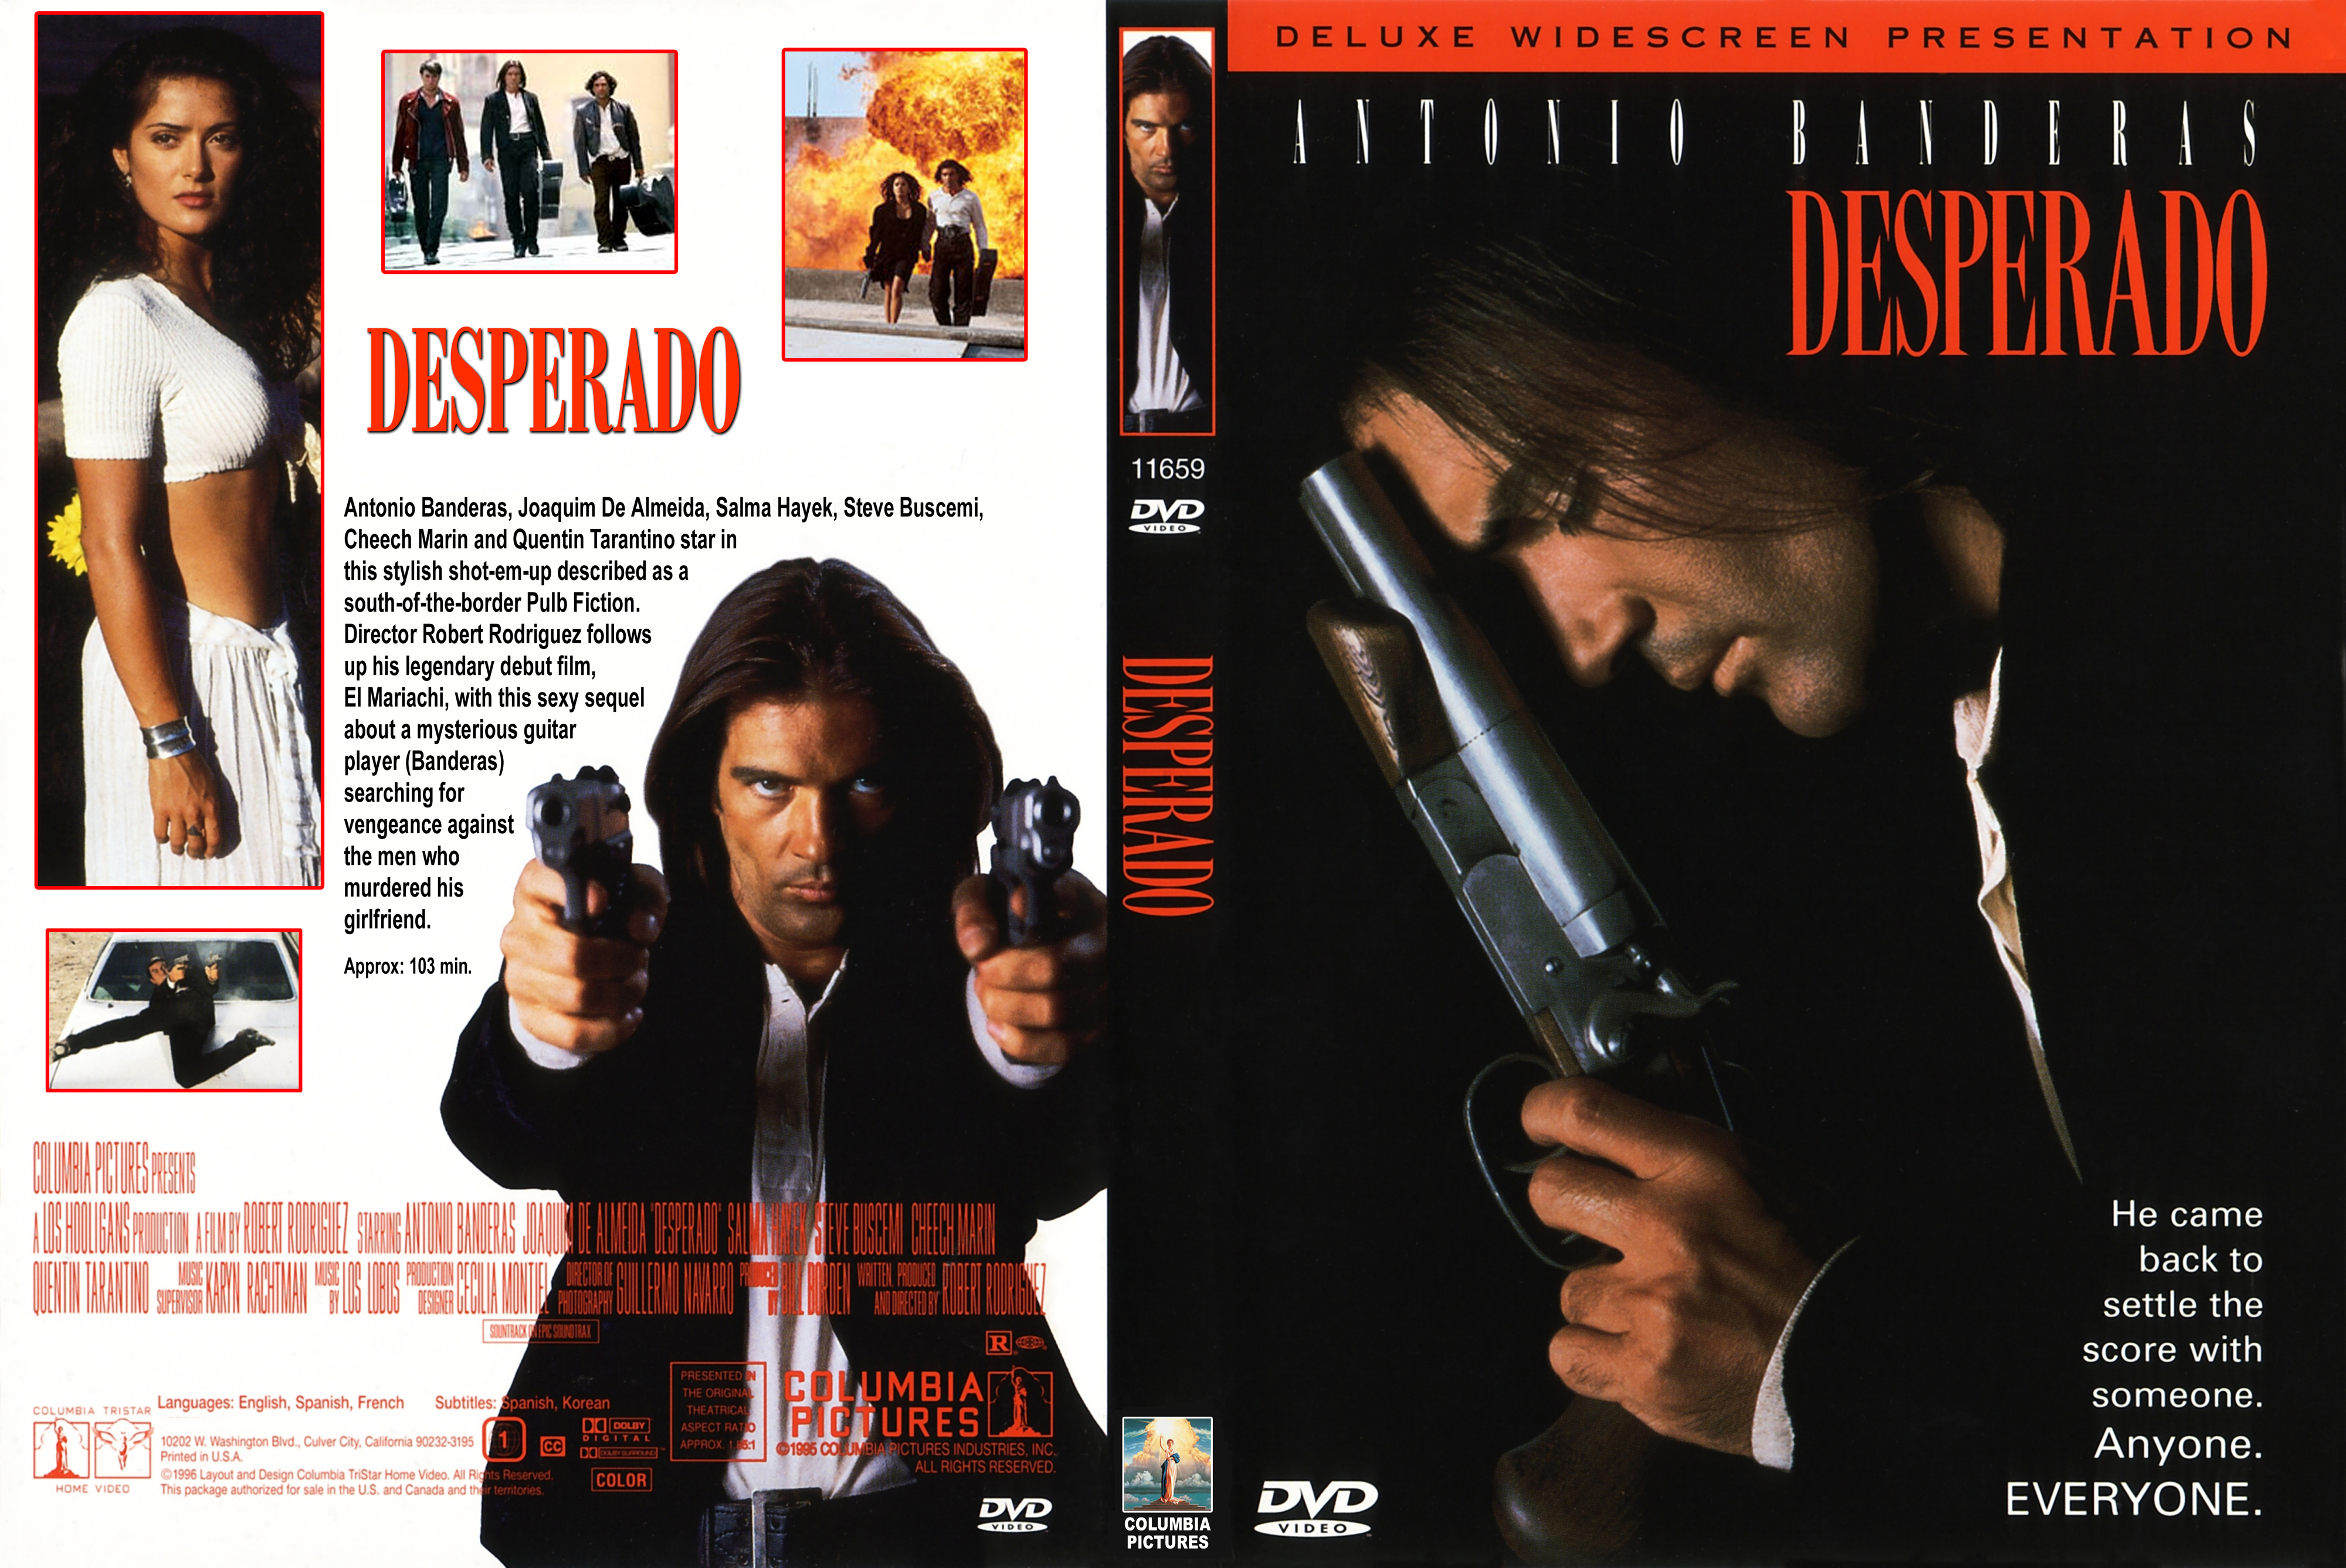 Desperado (DVD, 2003, Edition Speciale) *Cover Art in Spanish